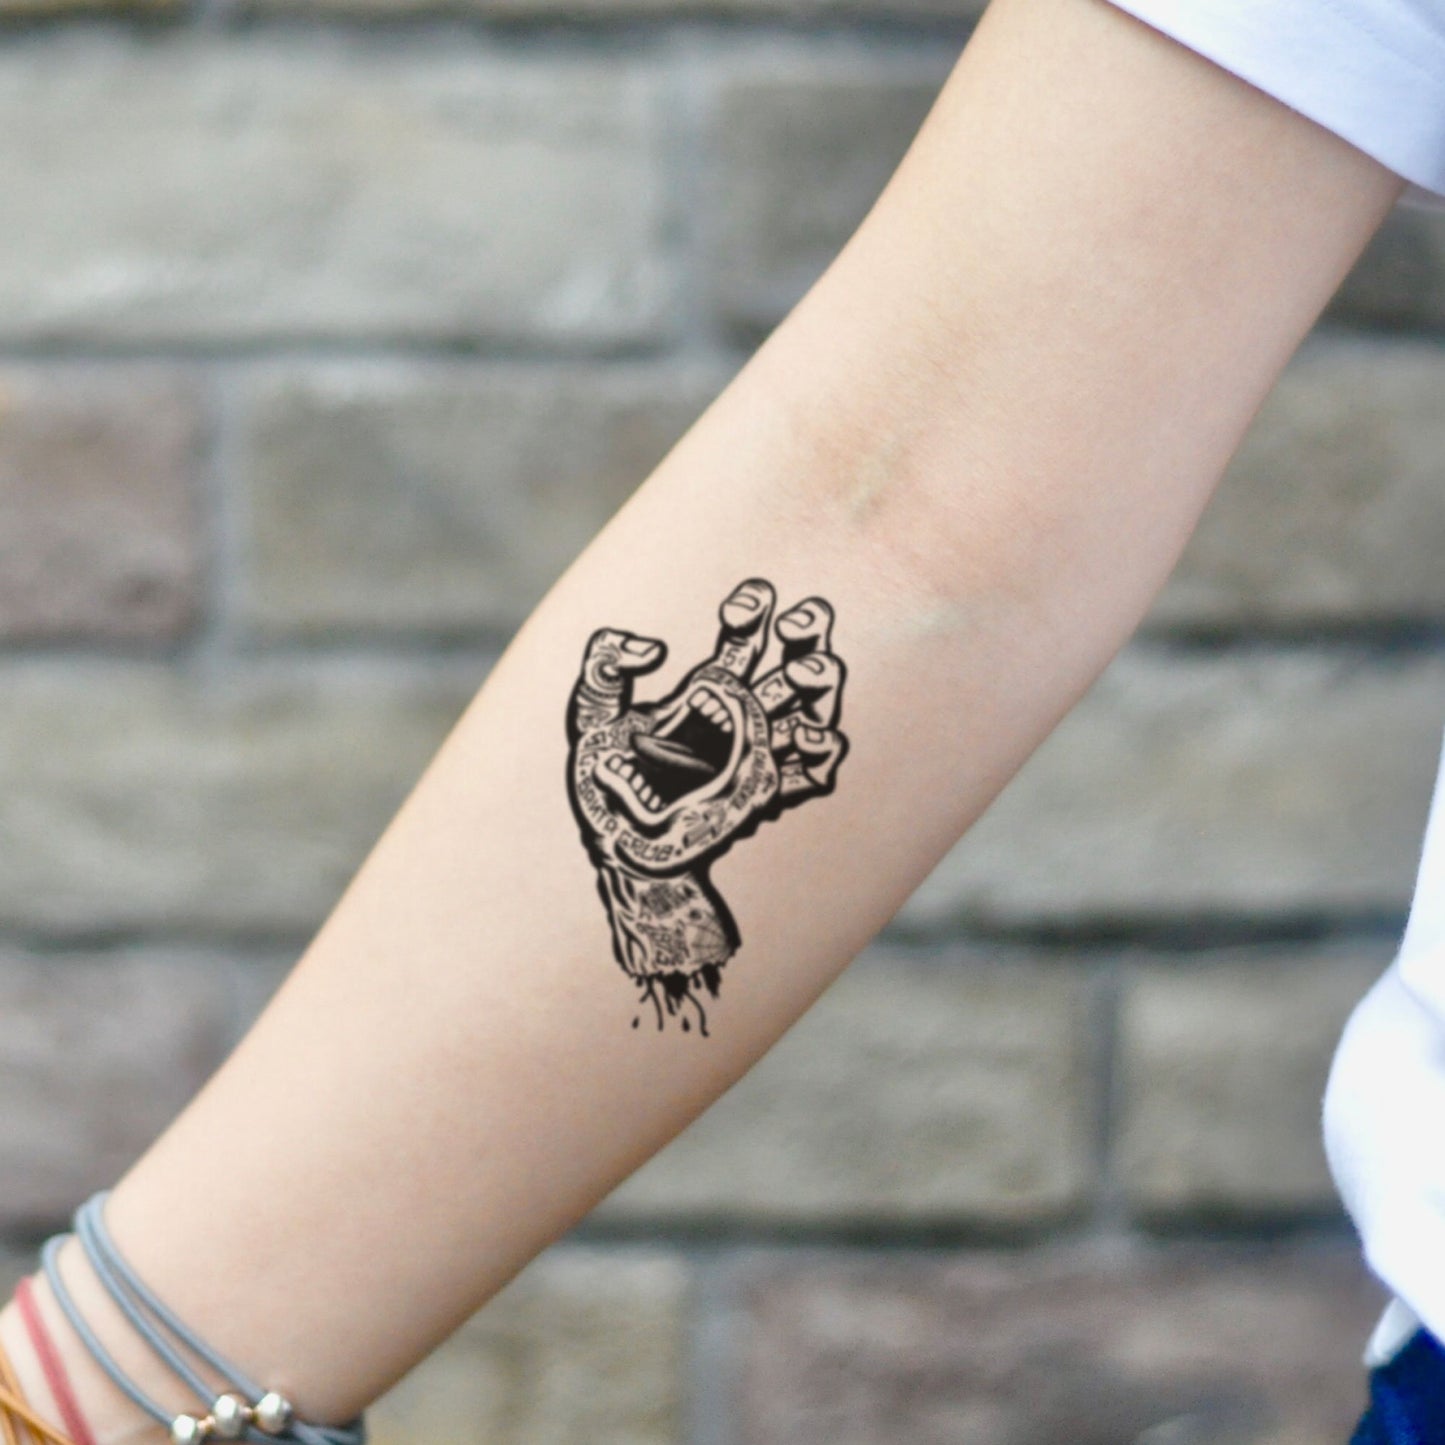 fake small santa cruz screaming zombie hand skateboard logo illustrative temporary tattoo sticker design idea on inner arm